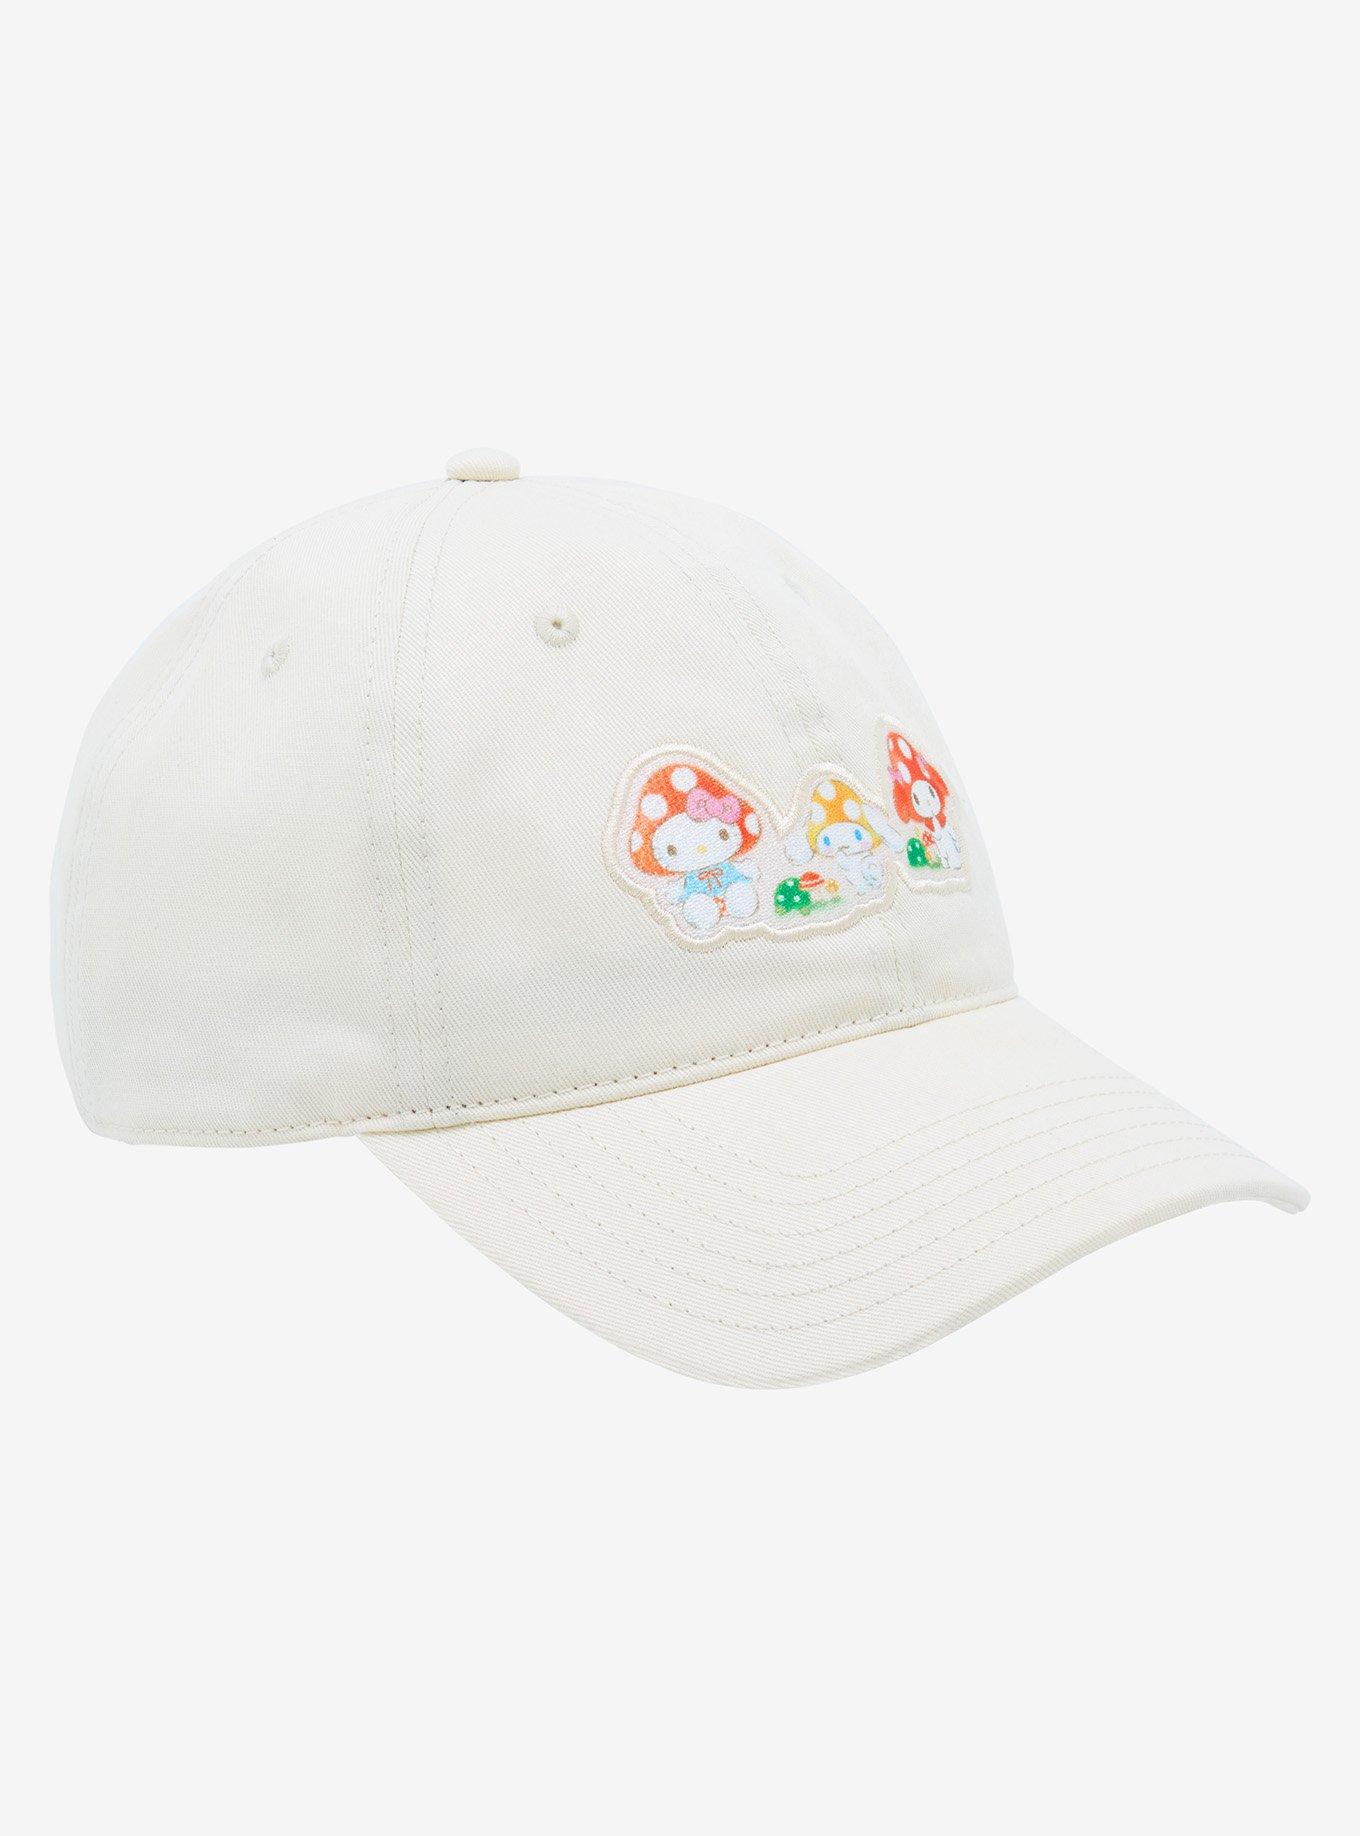 Sanrio Hello Kitty Mushroom Cap Enamel Pin - BoxLunch Exclusive